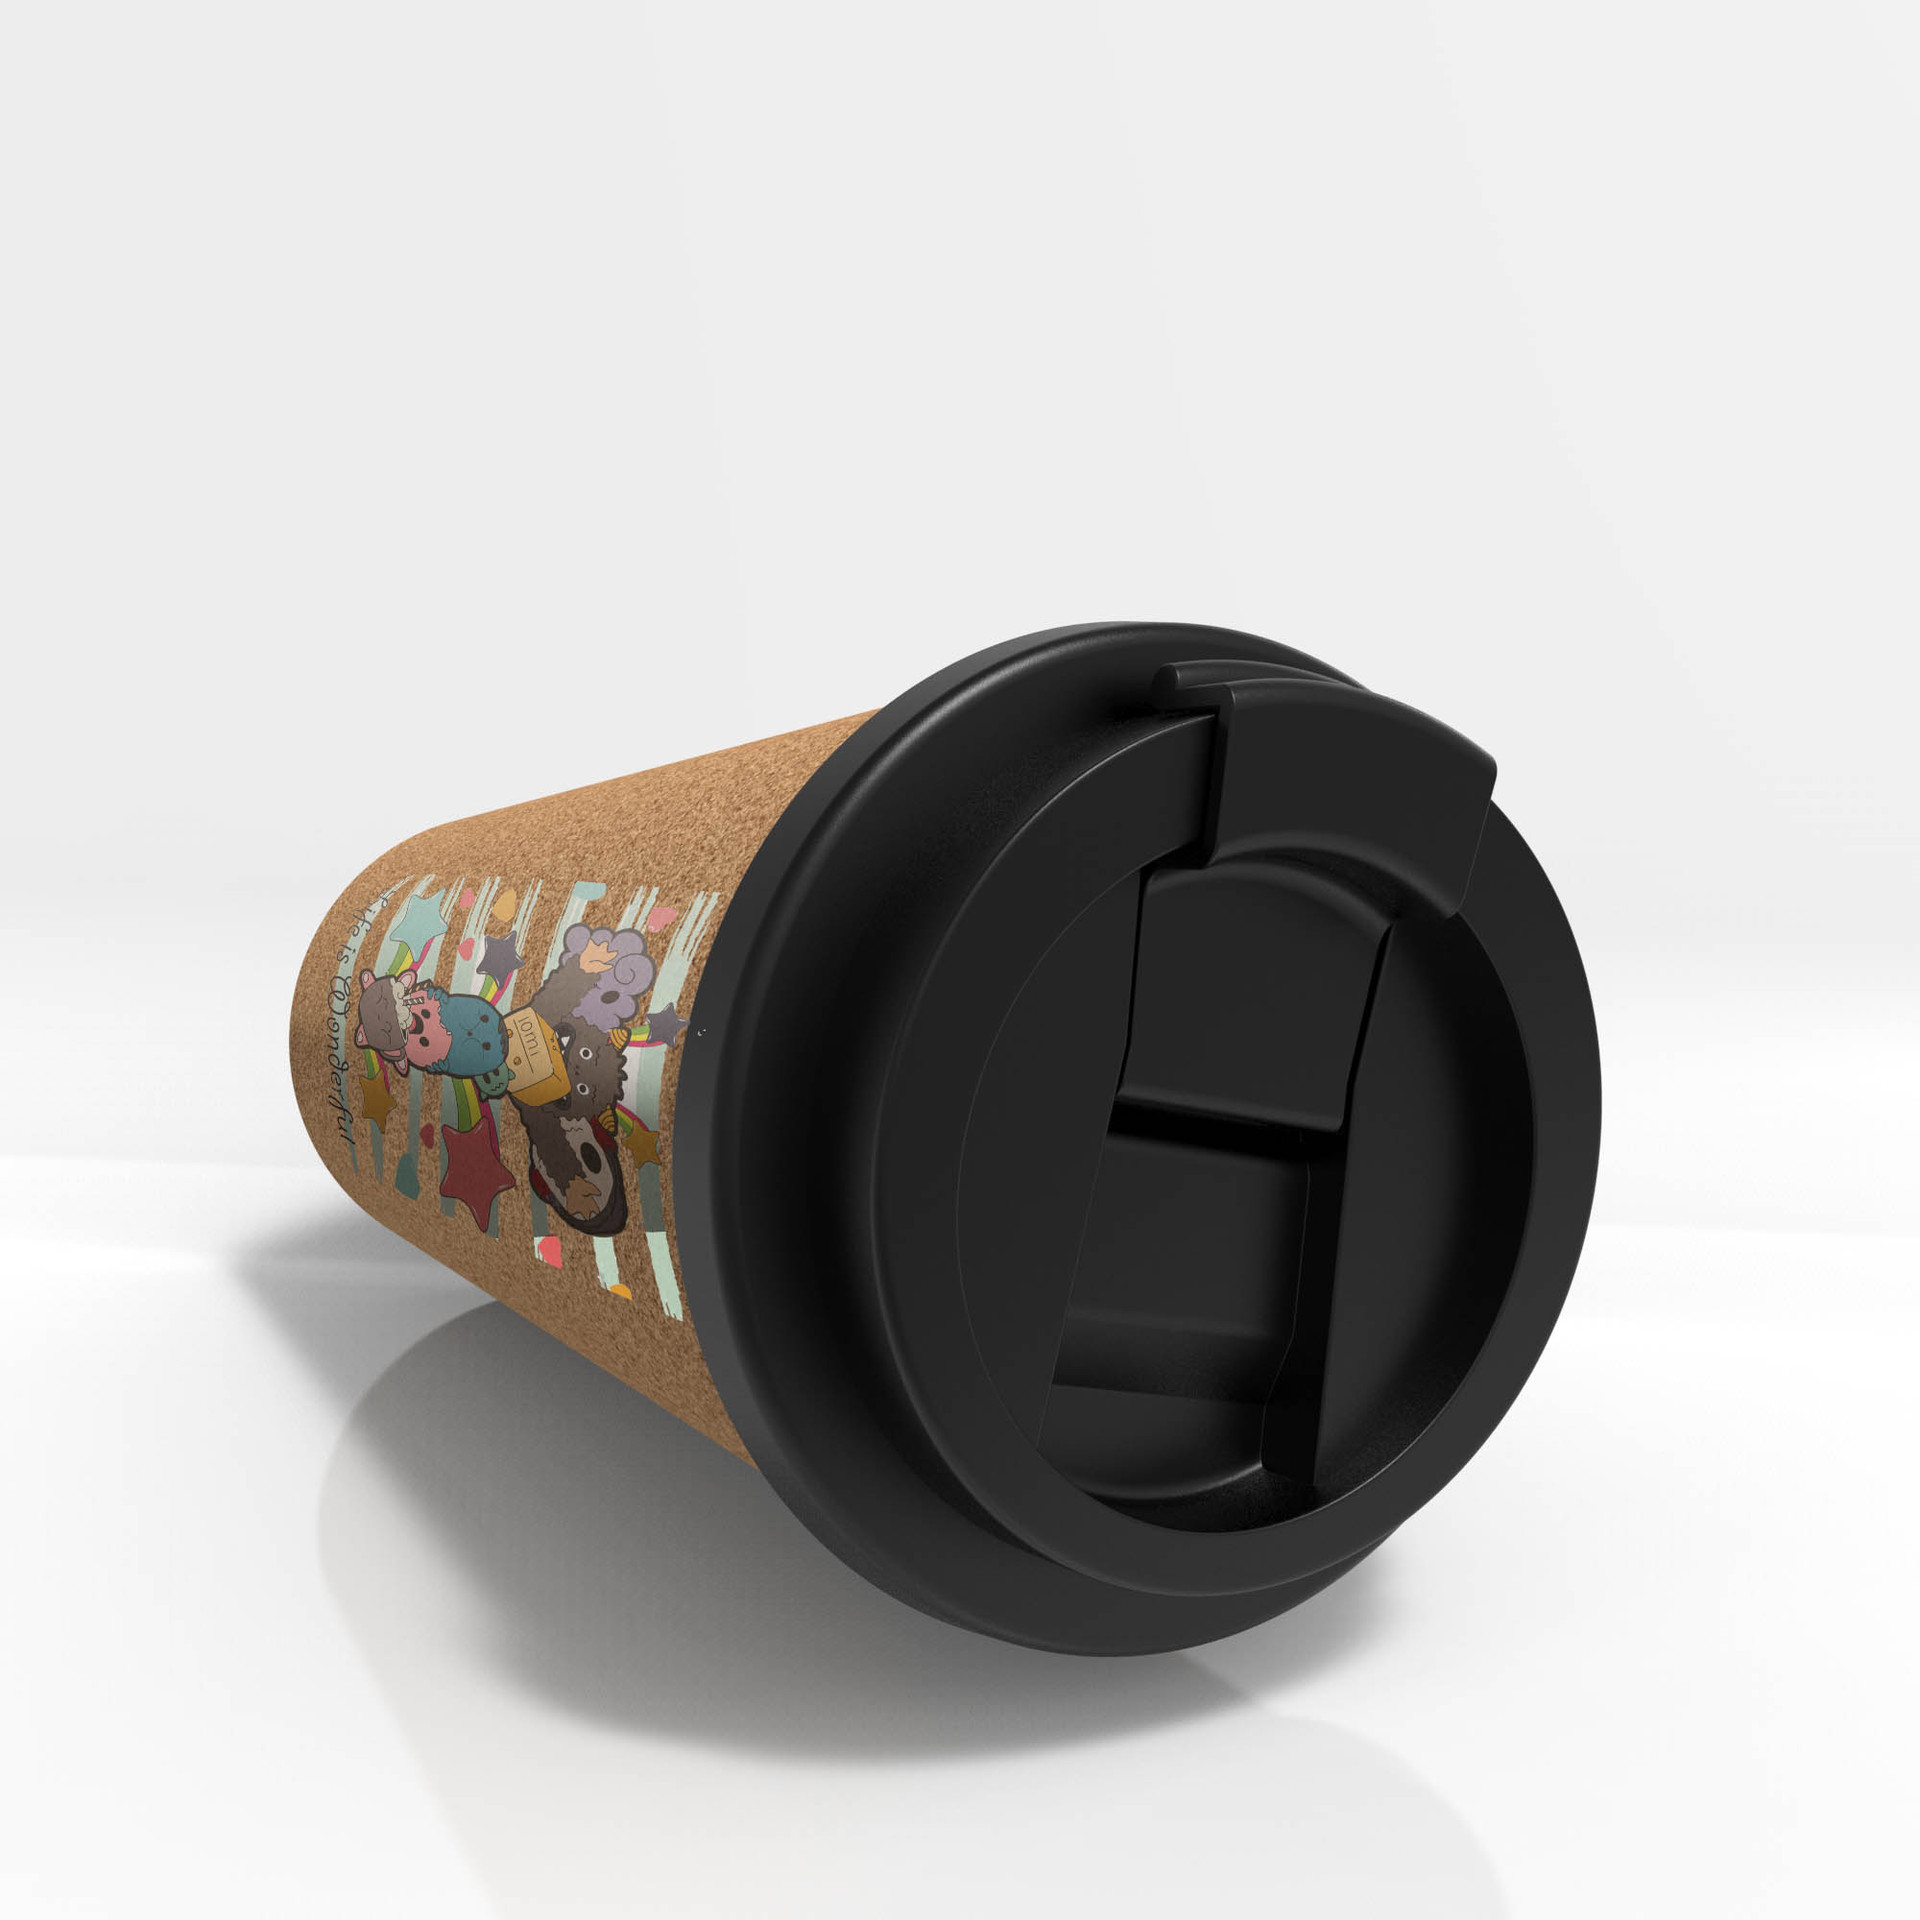 Cartoon environmentally friendly and non shattering PLA cork coffee cup creative fashion insulated mug